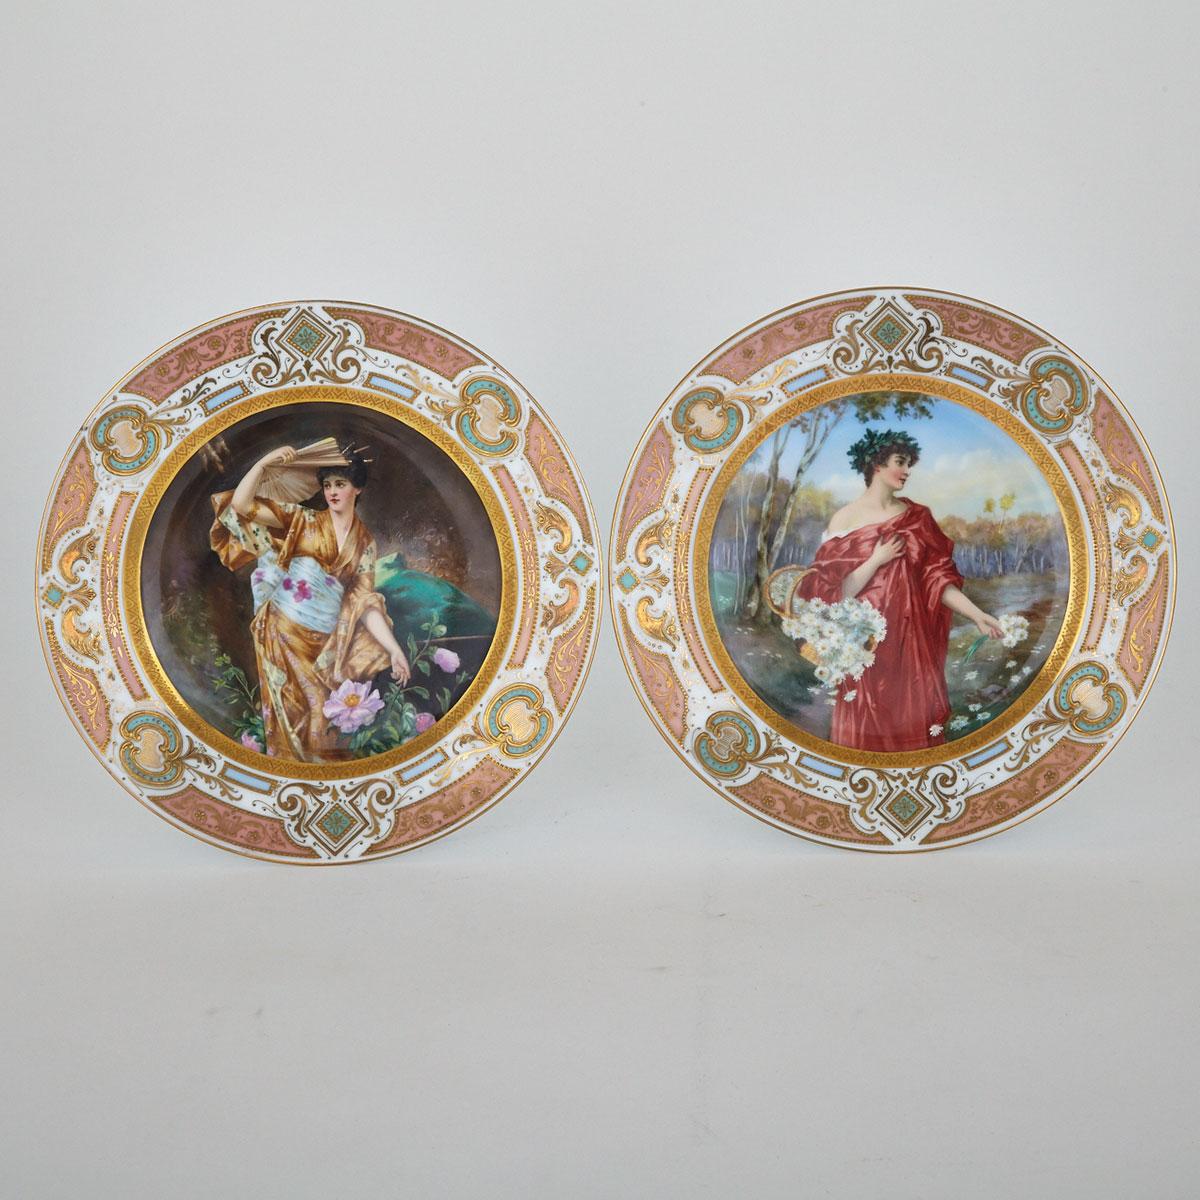 Pair of Richard Klemm Dresden Portrait Plates, ‘Margarite’ and ‘Tum Tum’, c.1900